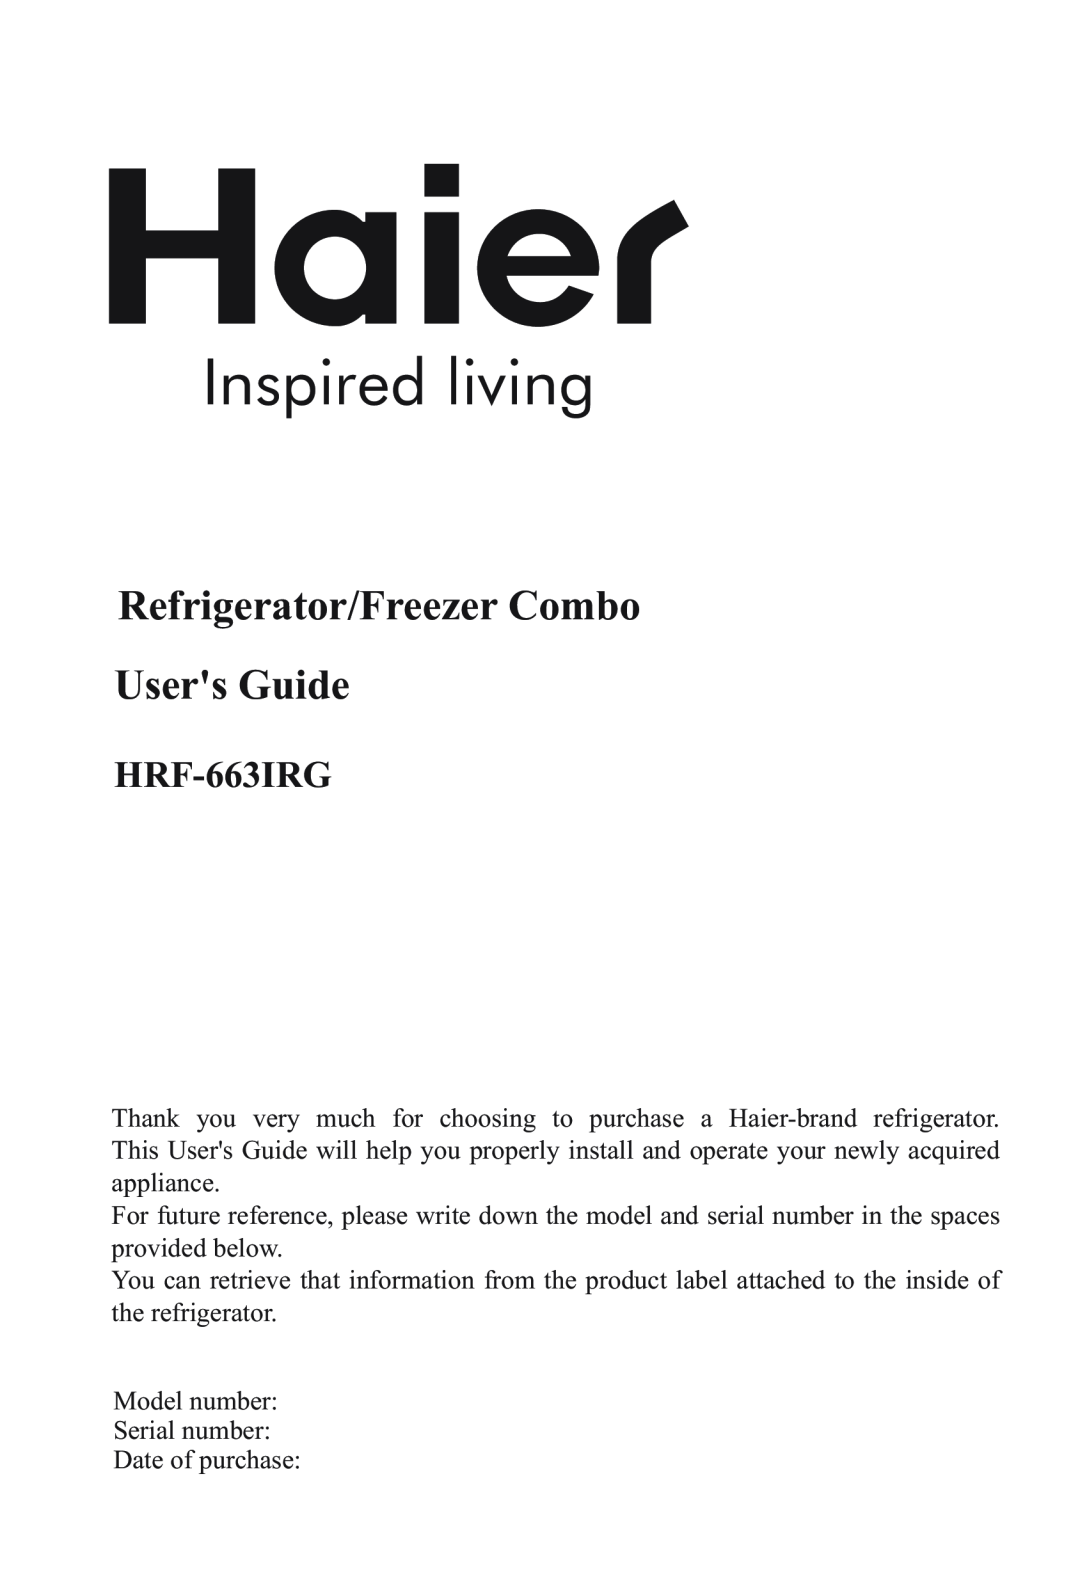 Haier HRF-6631RG manual Refrigerator/Freezer Combo Users Guide, Inspired living, HRF-663IRG 